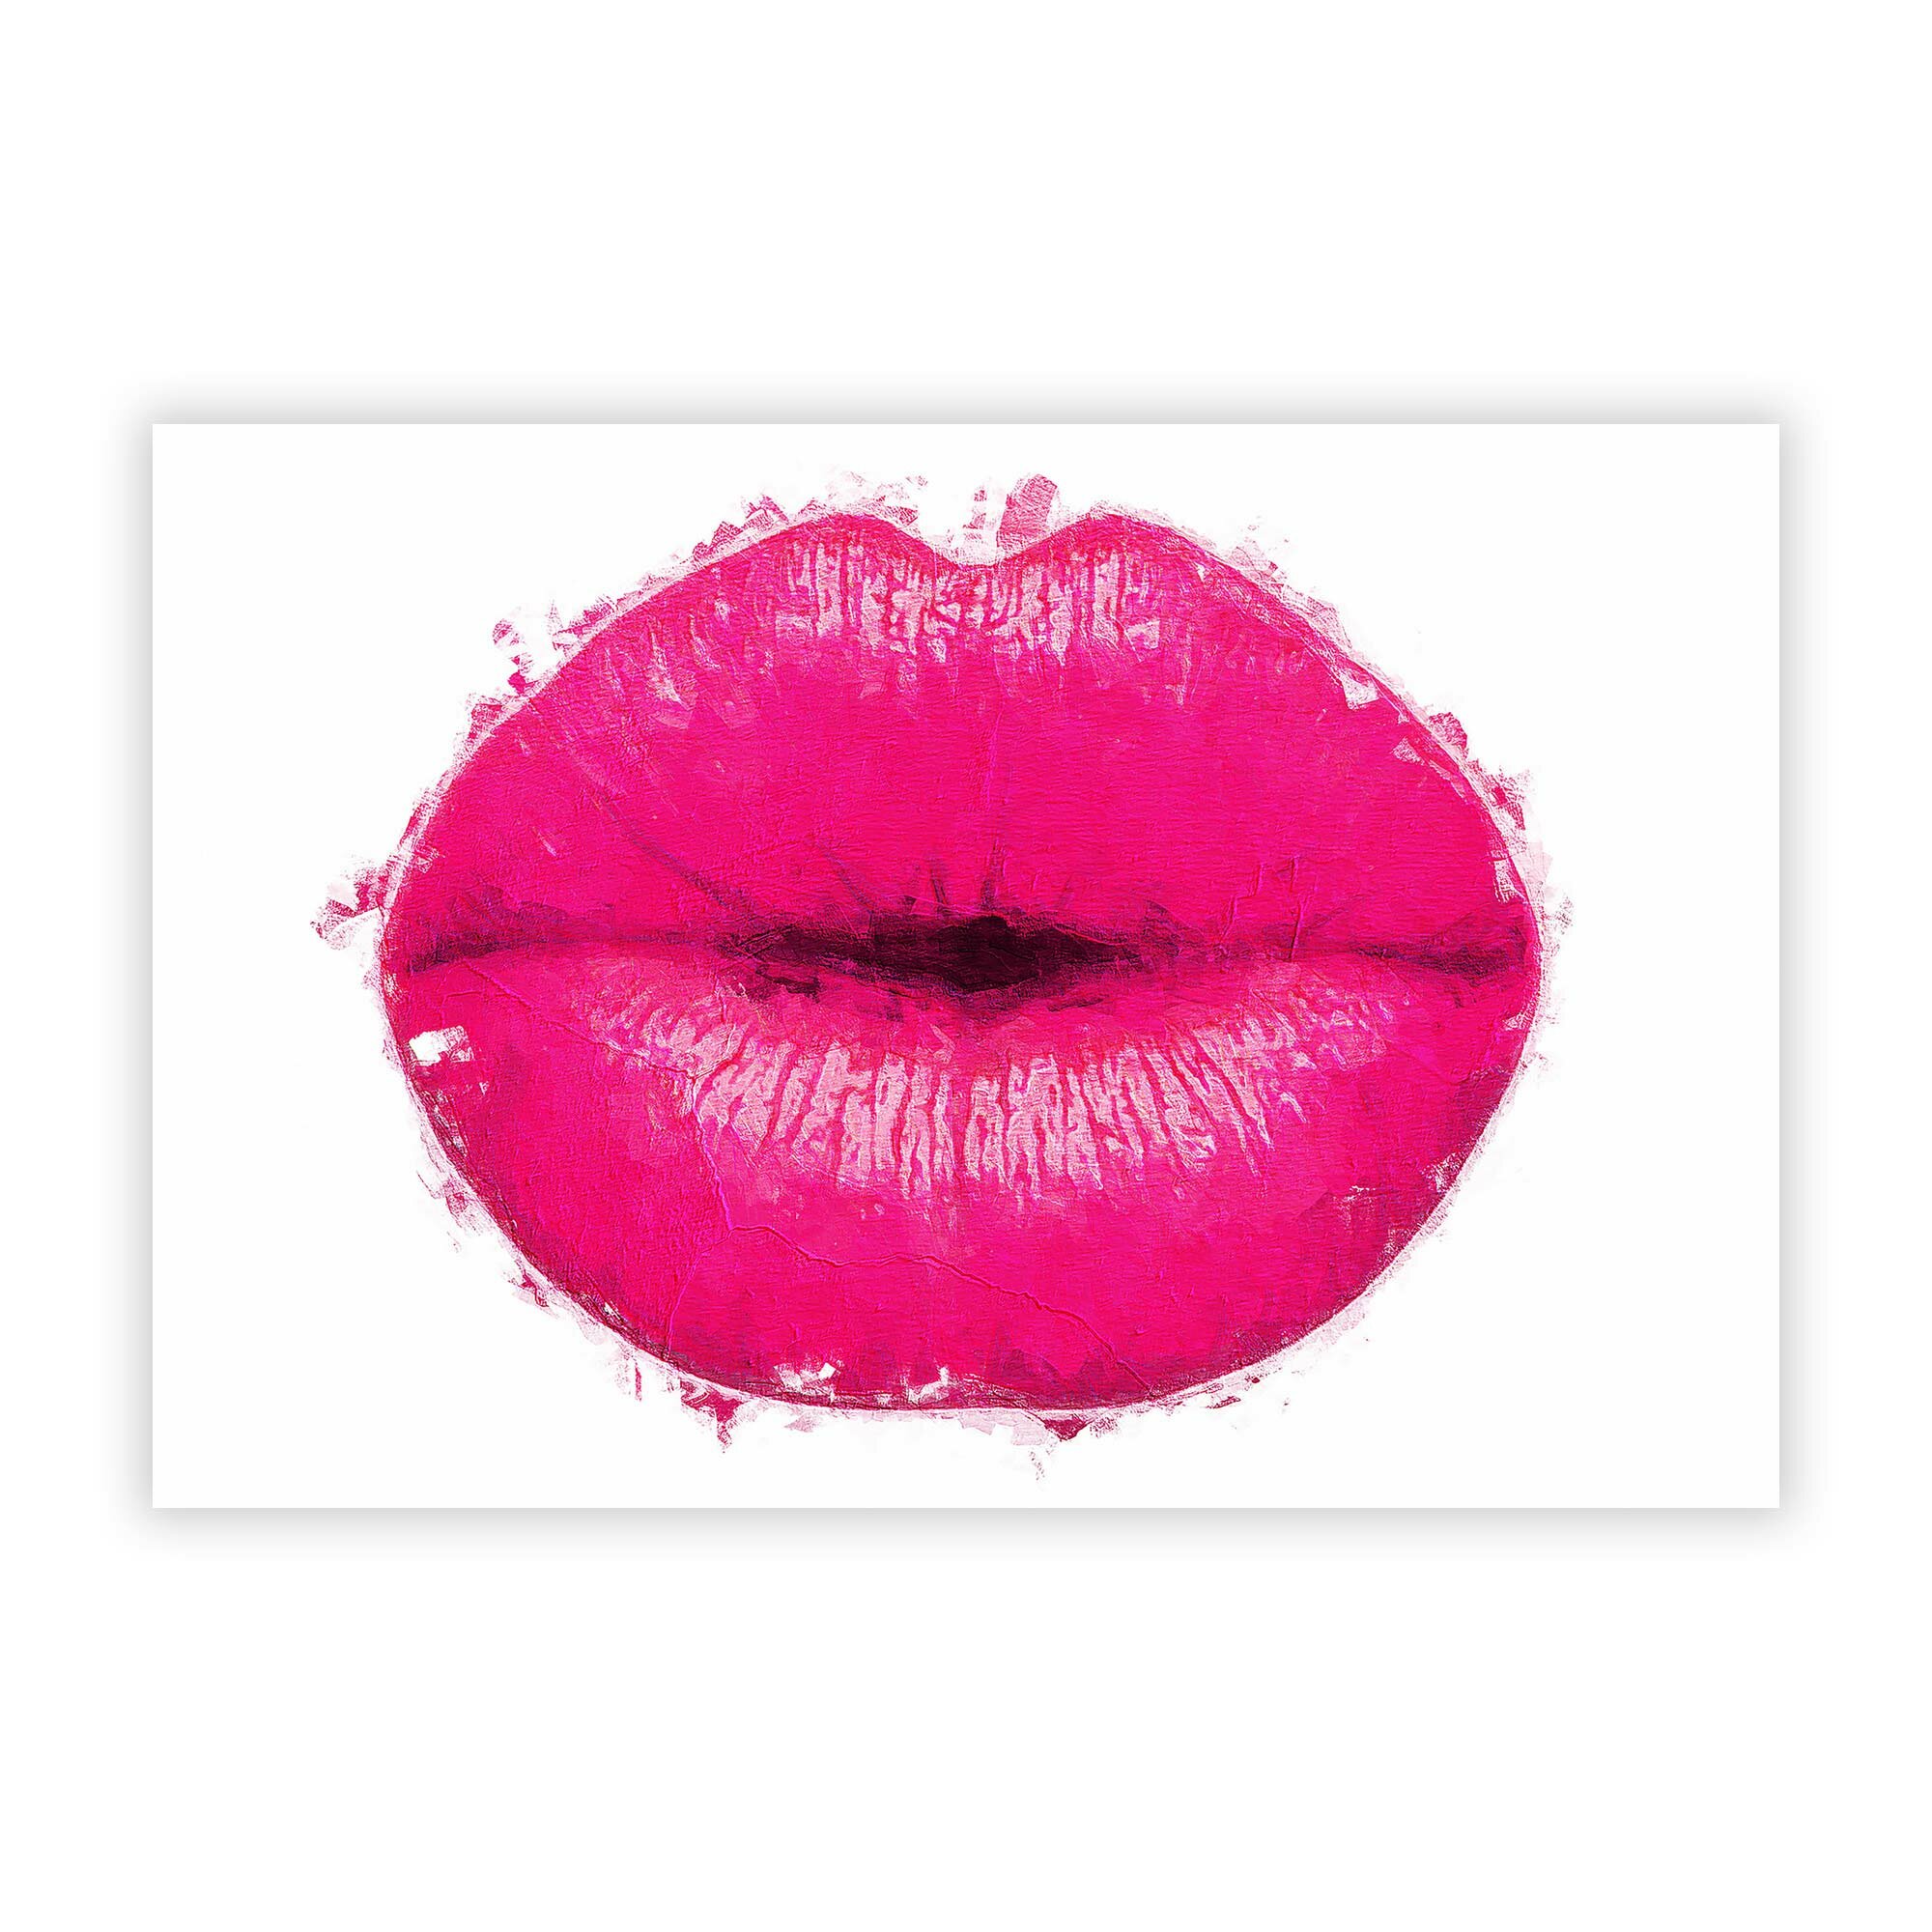 Simțițivă rău Analitic marionetă  East Urban Home Hot Pink Lips - Unframed Painting | Wayfair.co.uk